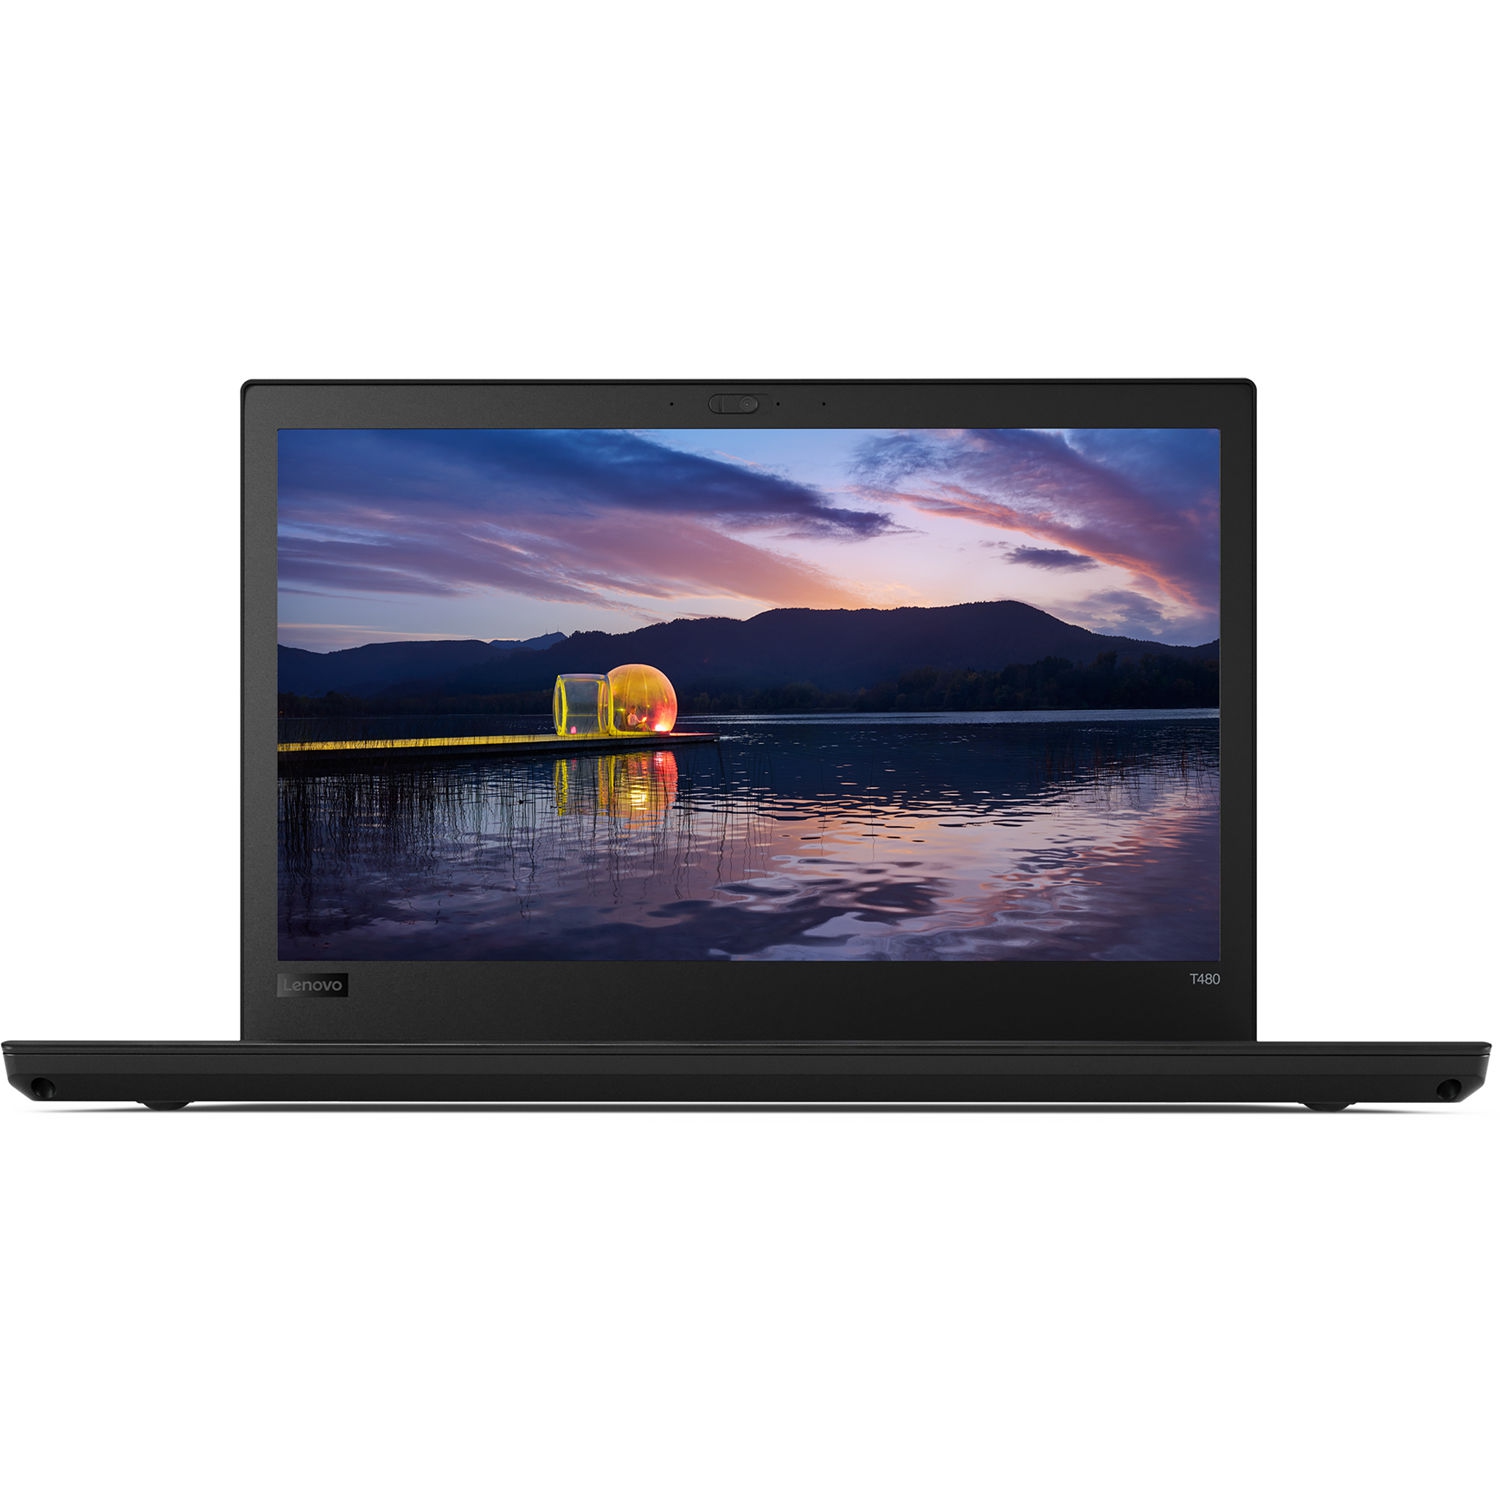 Refurbished (Good) - Lenovo Thinkpad T480 Laptop Intel Core i5 1.70 GHz 8GB Ram 256GB SSD W10P